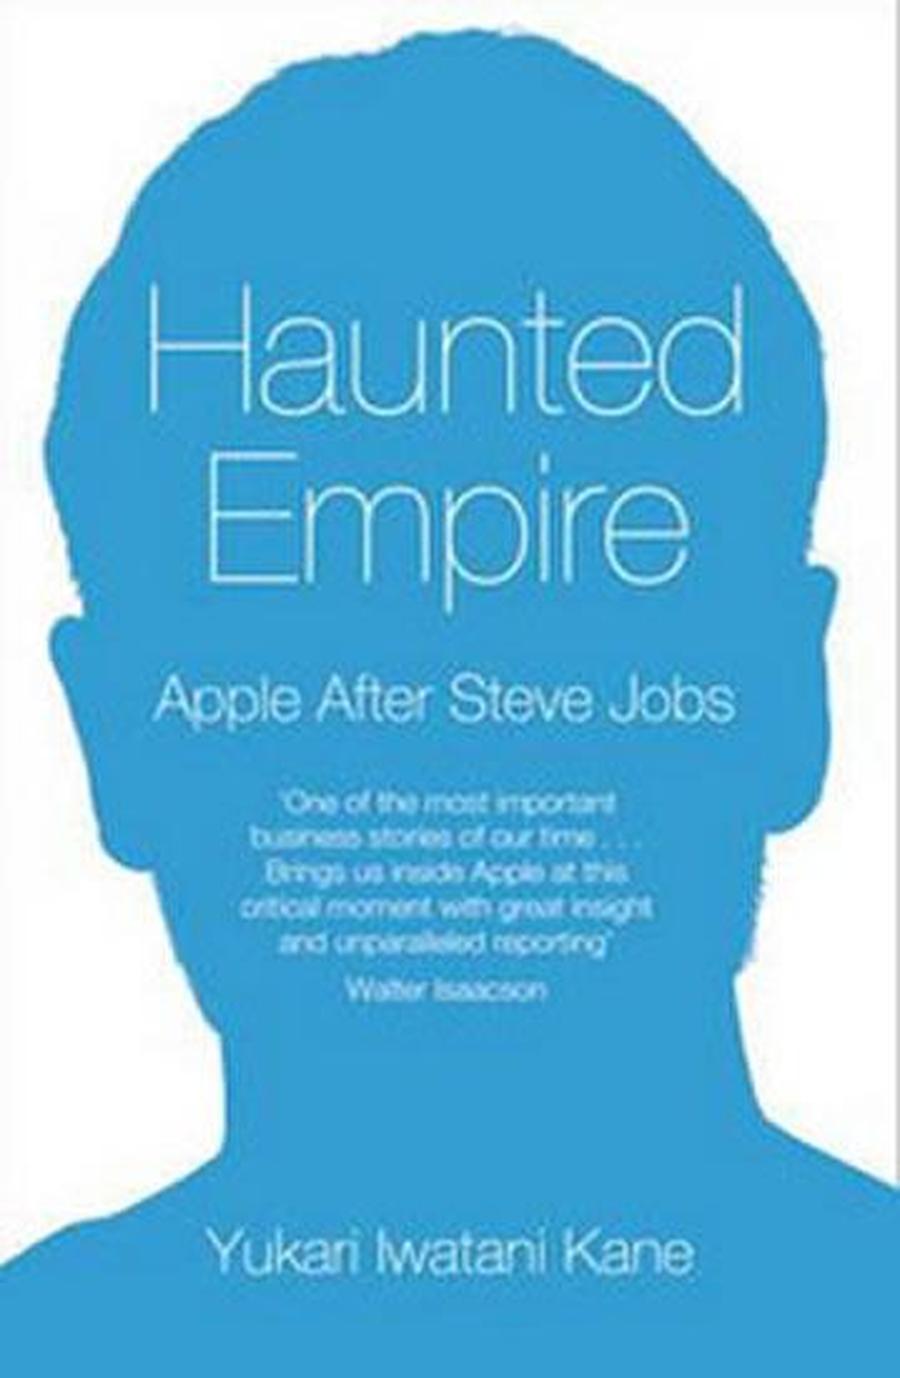 Haunted Empire - Apple After Steve Jobs - Kane Yukari Iwatani